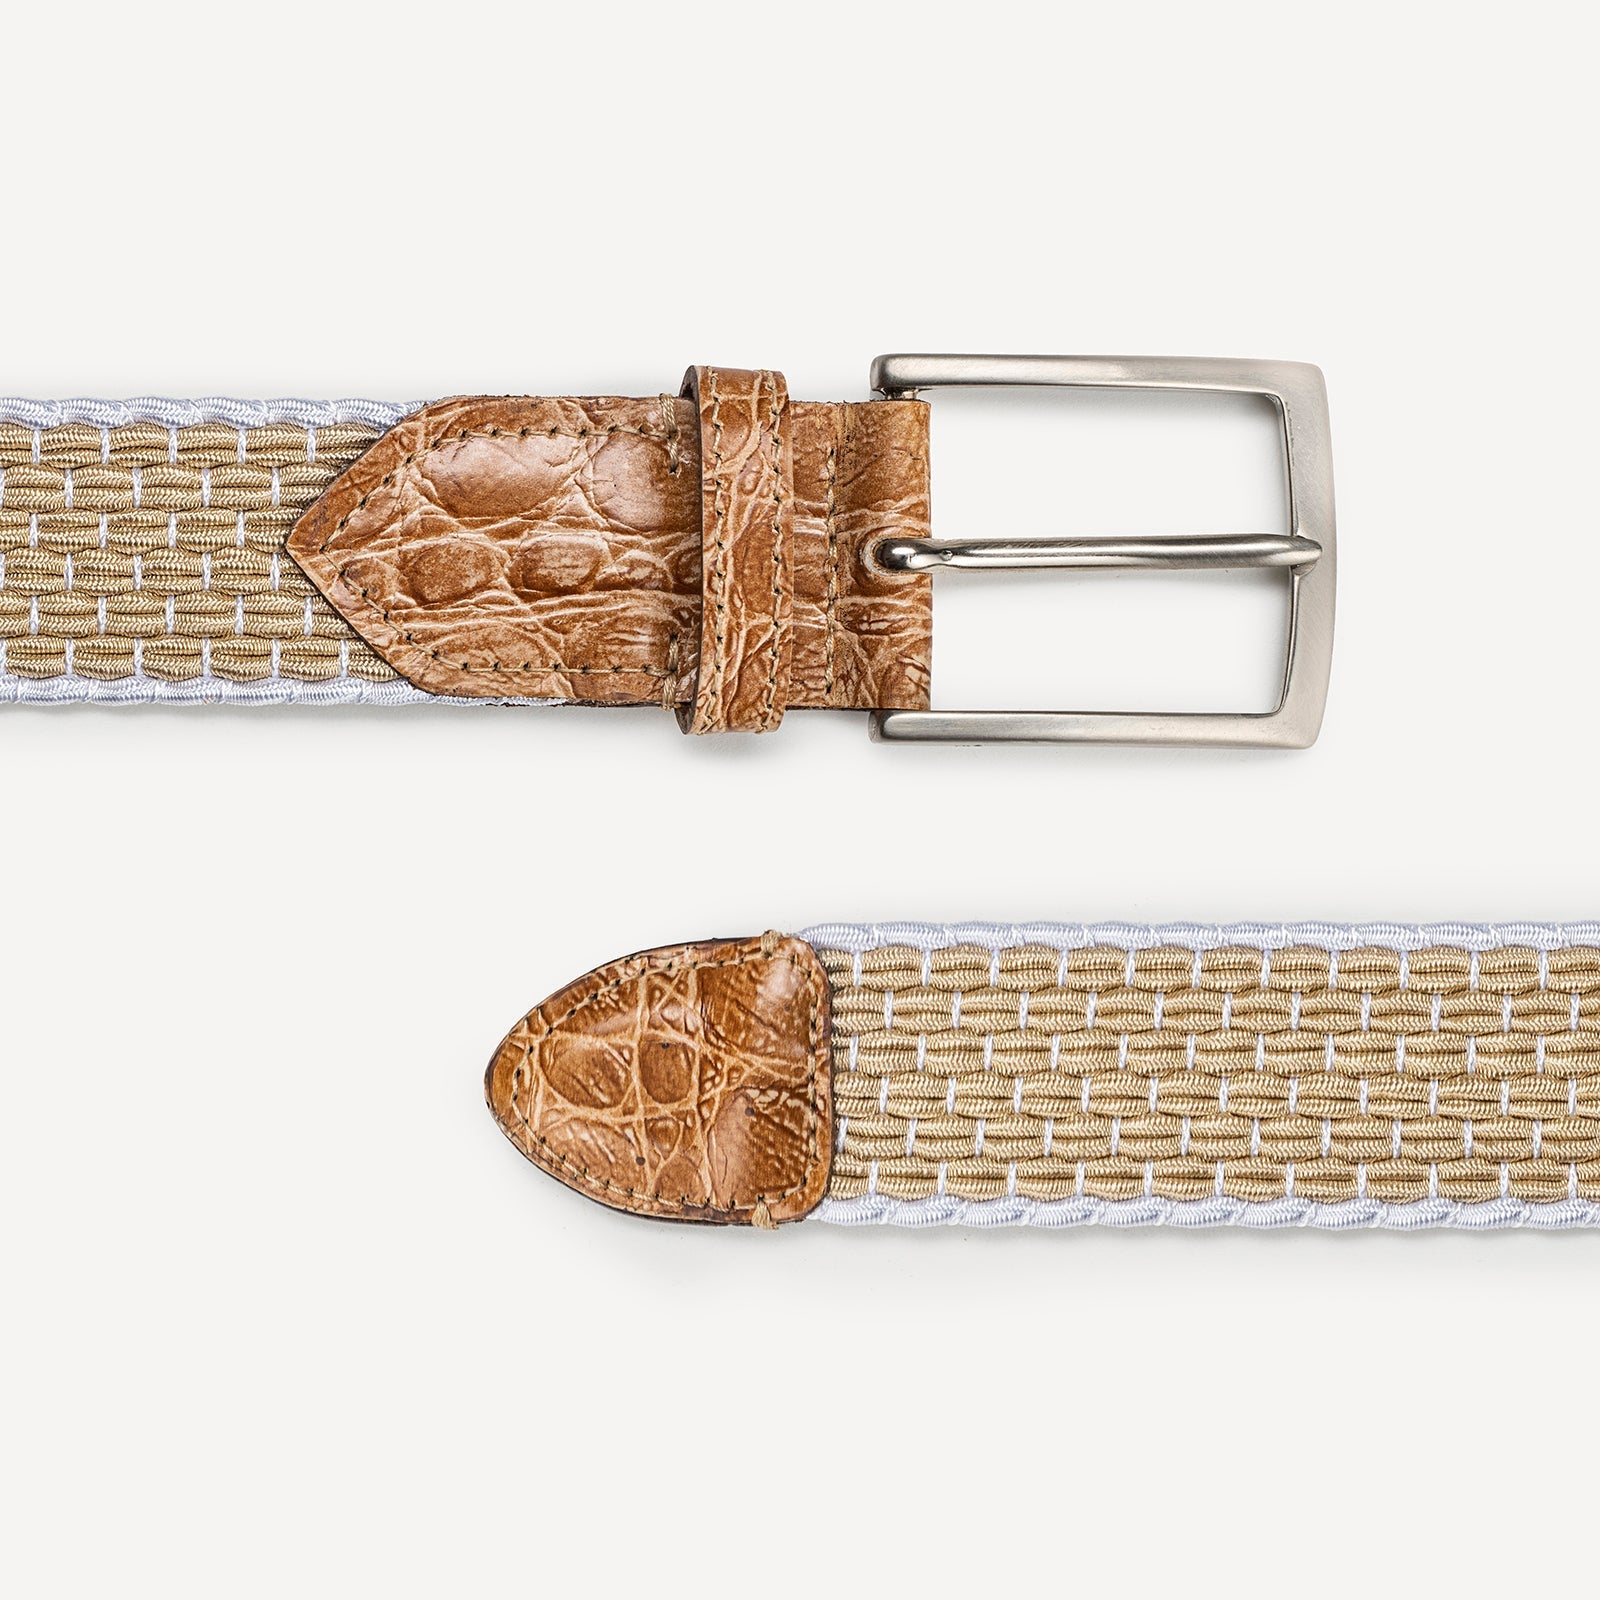 Belt 14/20 bicolor 100% Capri white and natural color leather belt